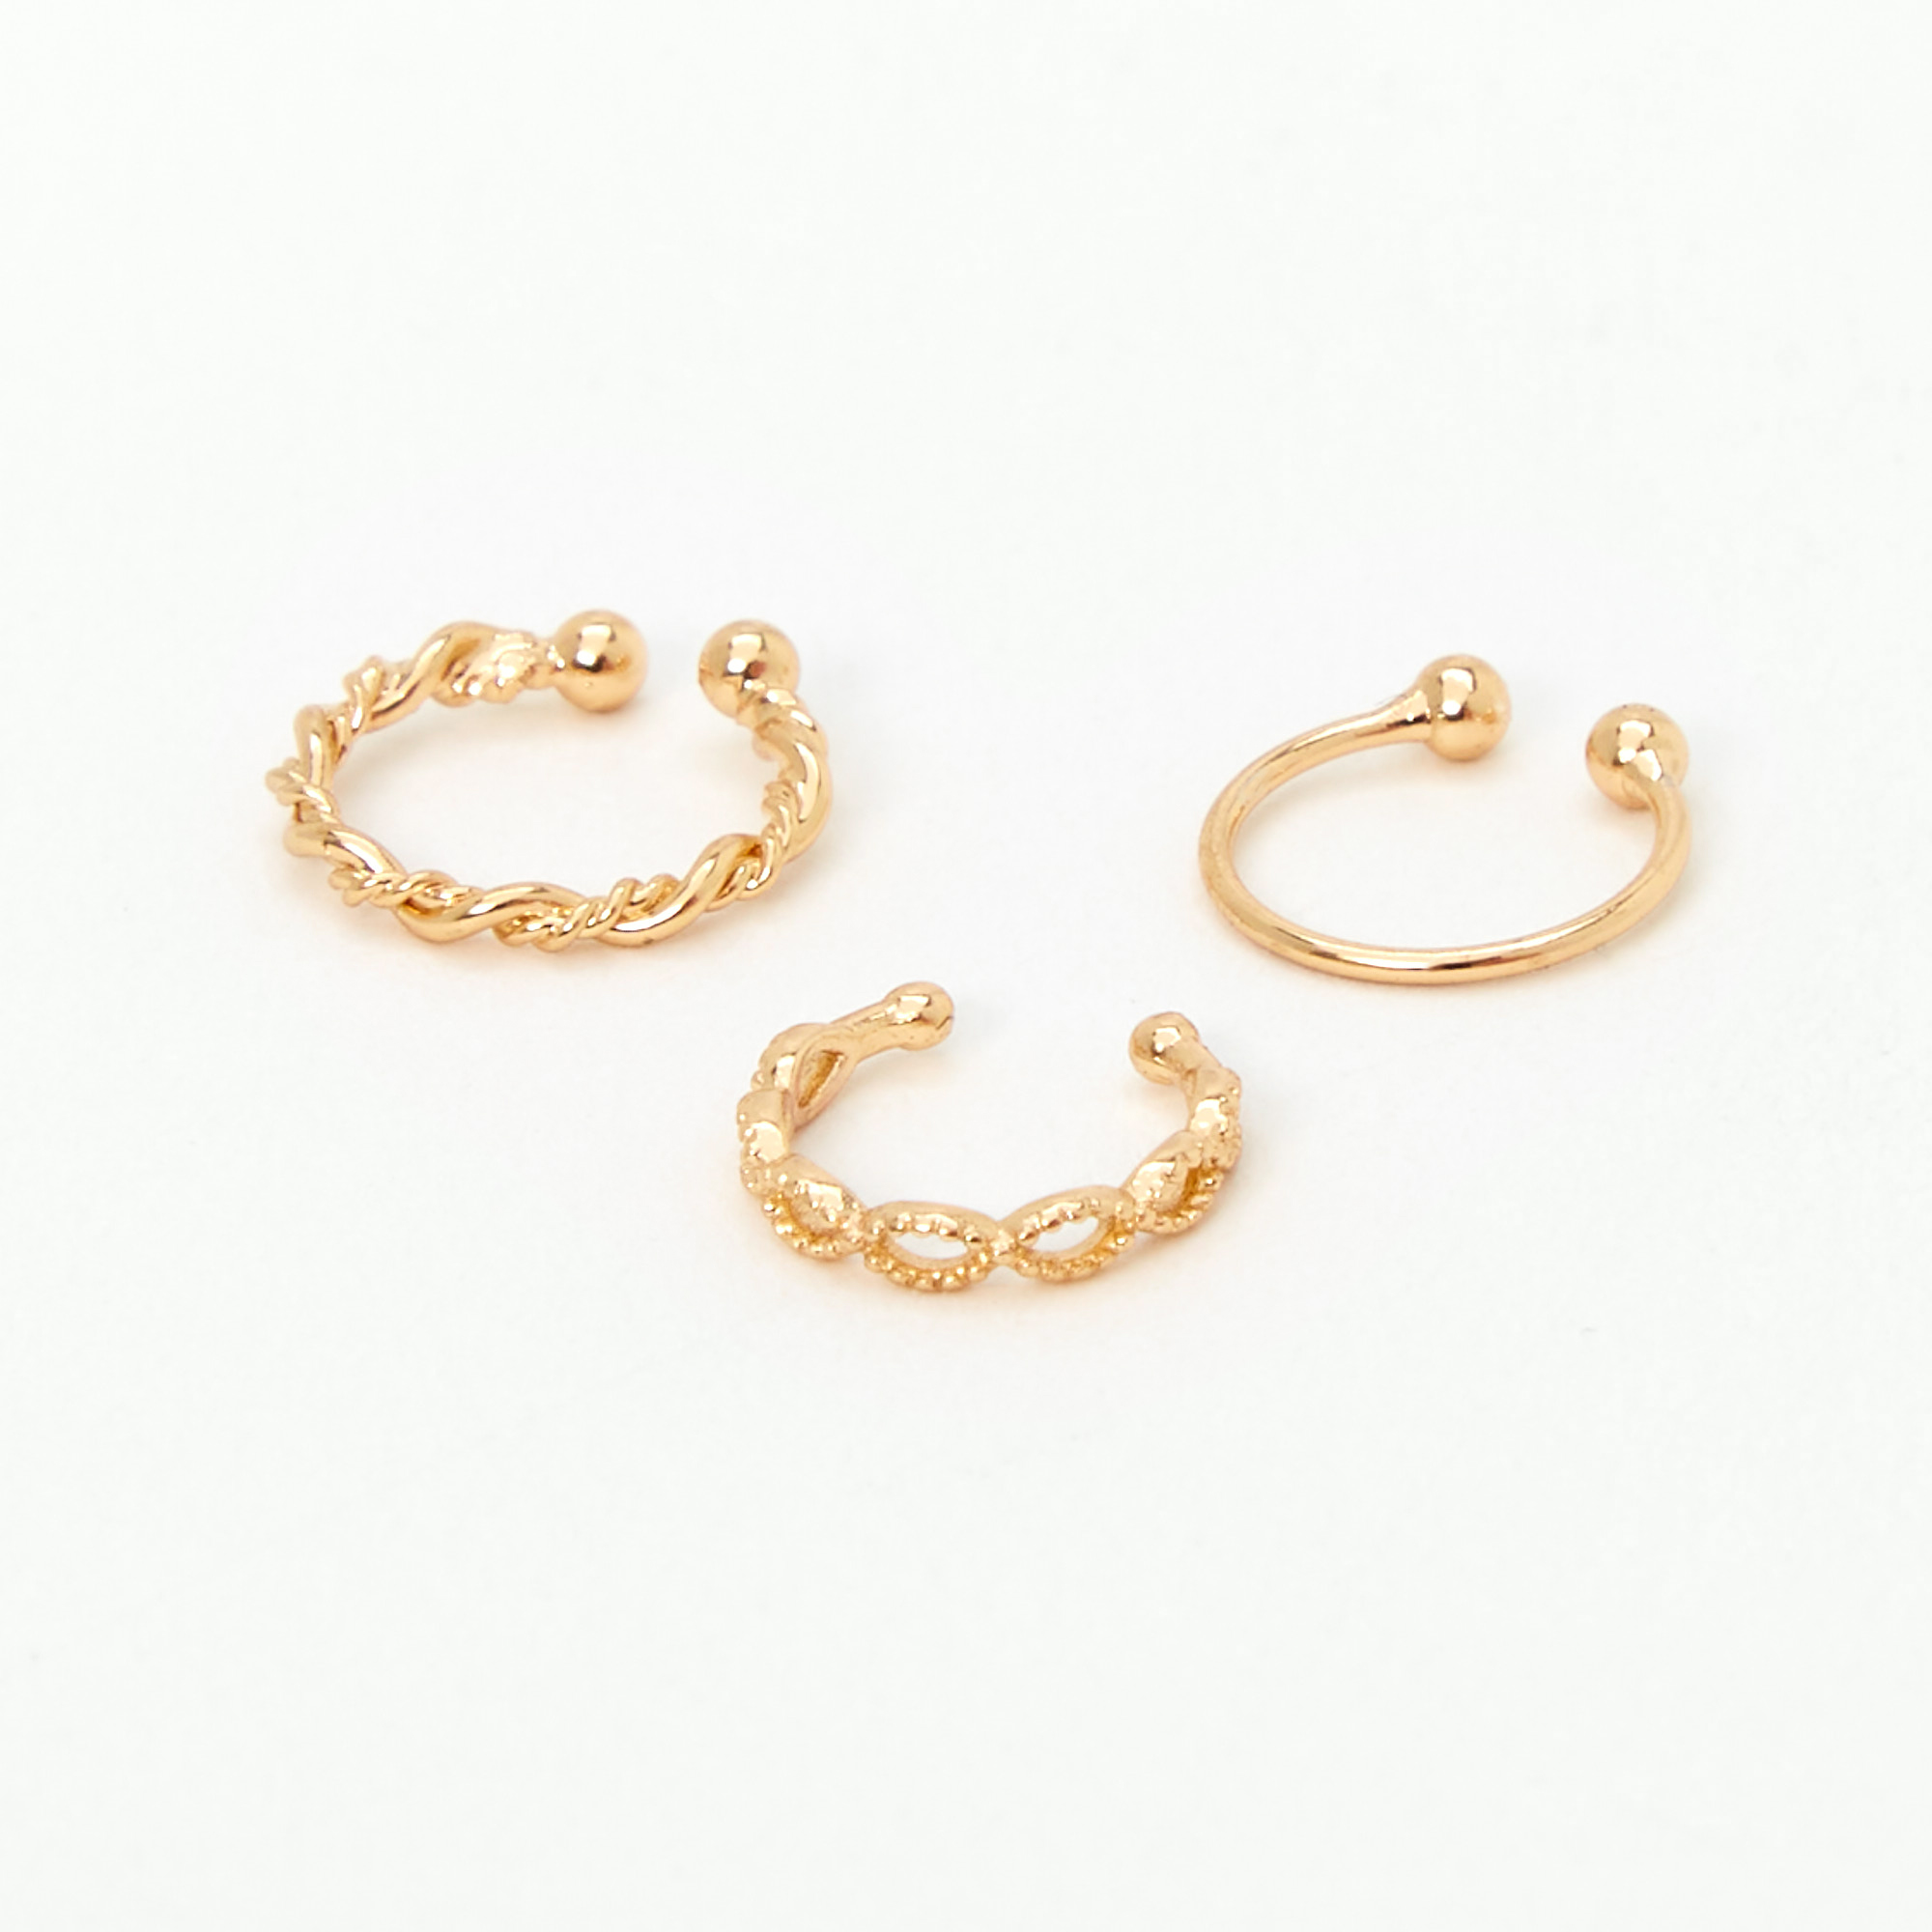 anneaux piercing